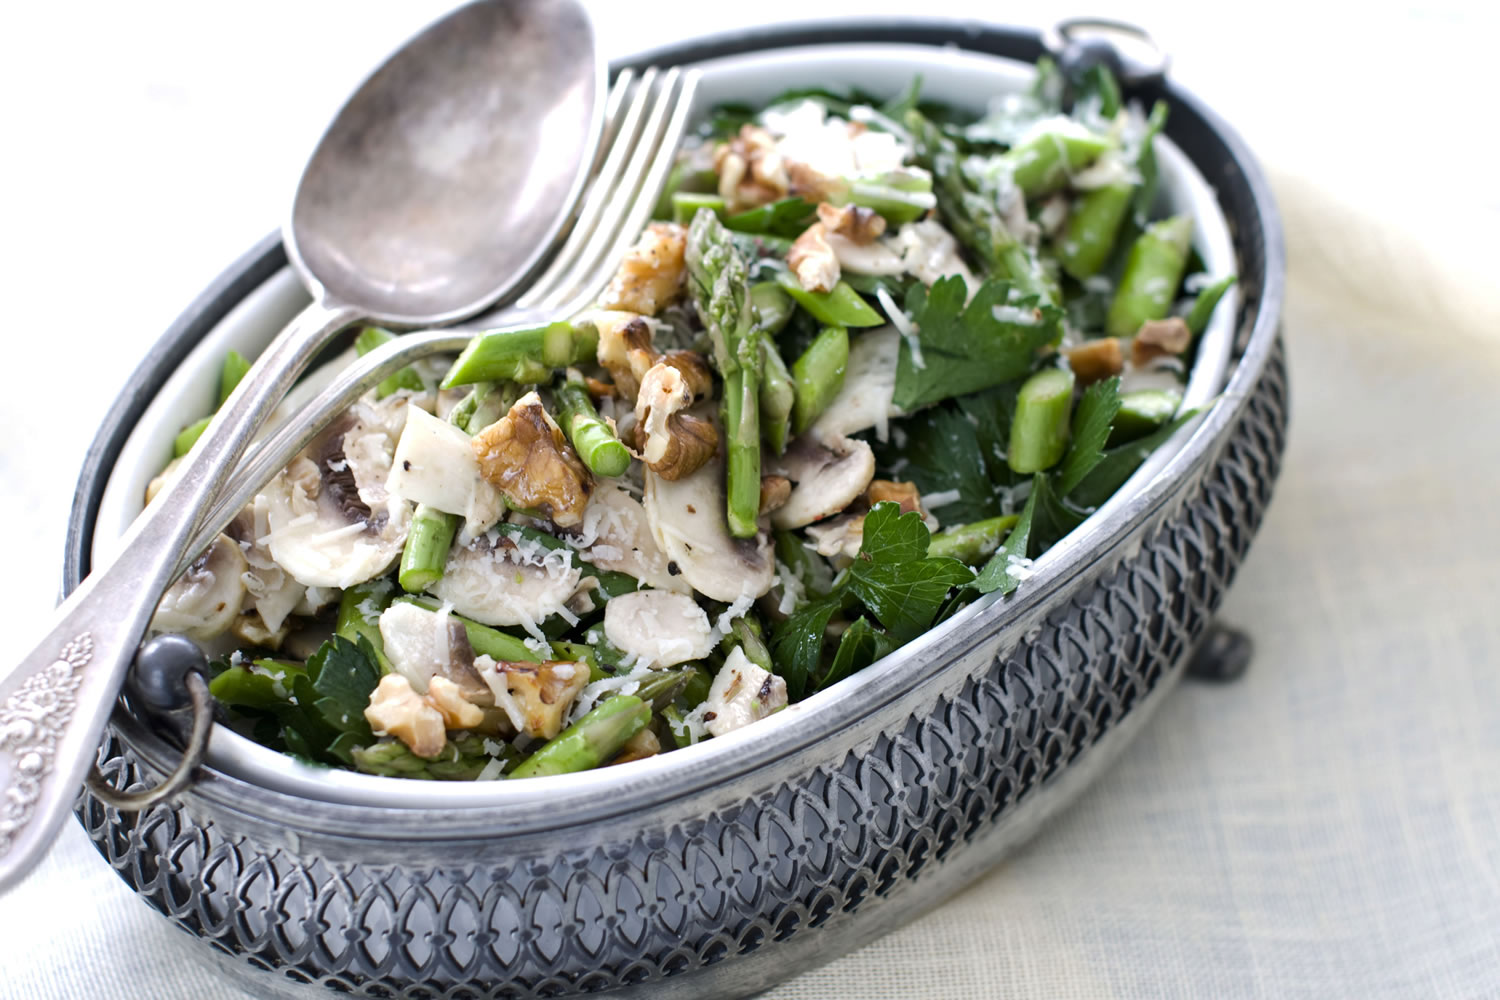 Raw Asparagus, Mushroom And Parsley Salad With Nuts